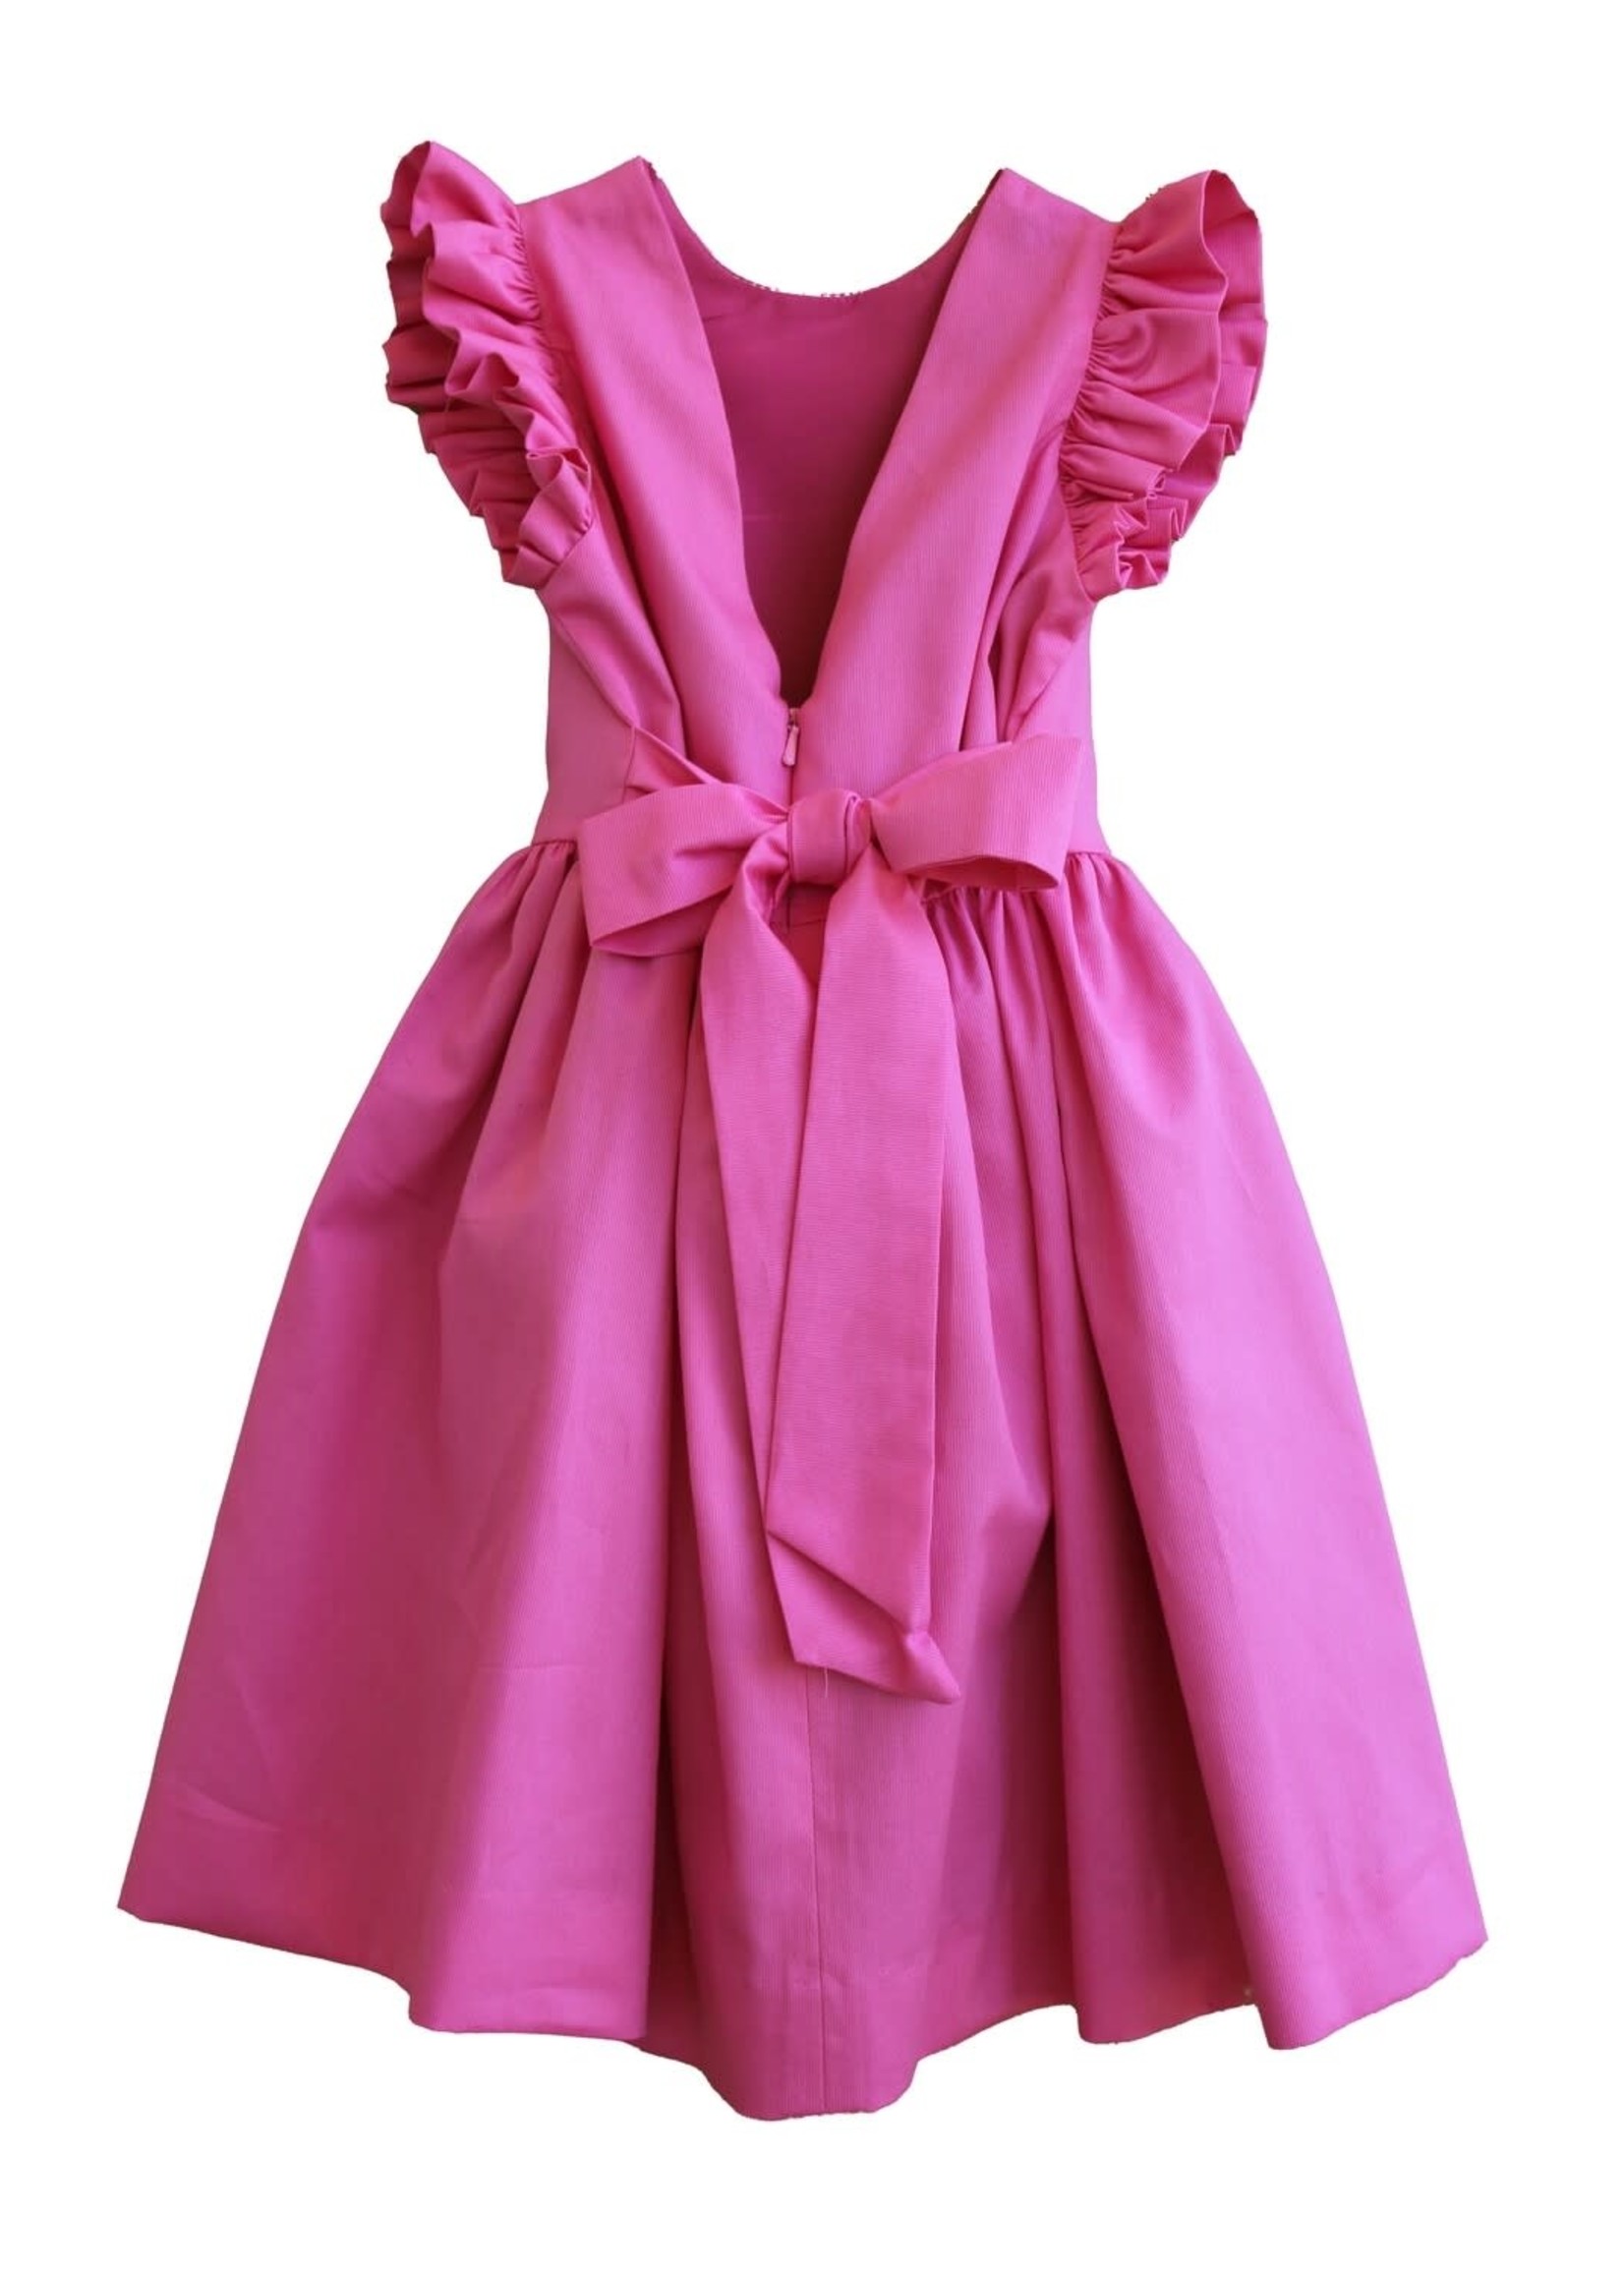 Suzanne Lively Geranium Pink Dress